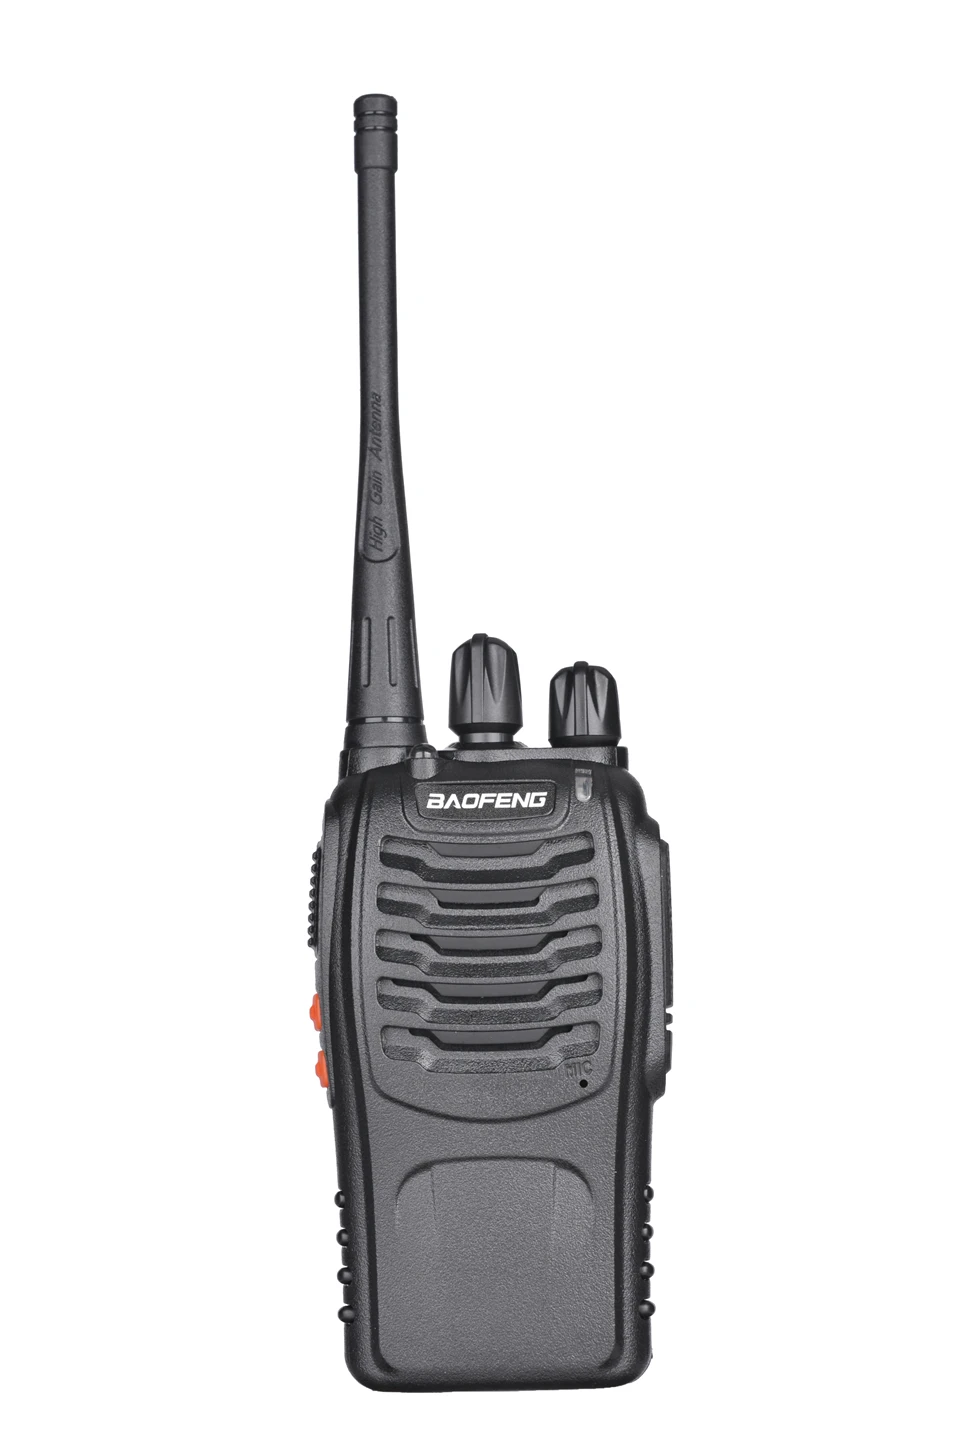 5 шт. Baofeng BF-888s рация UHF Handy Talky BF 888s 5 Вт Wolki Tolki 888 CB радио Comunicador PTT рация трансивер